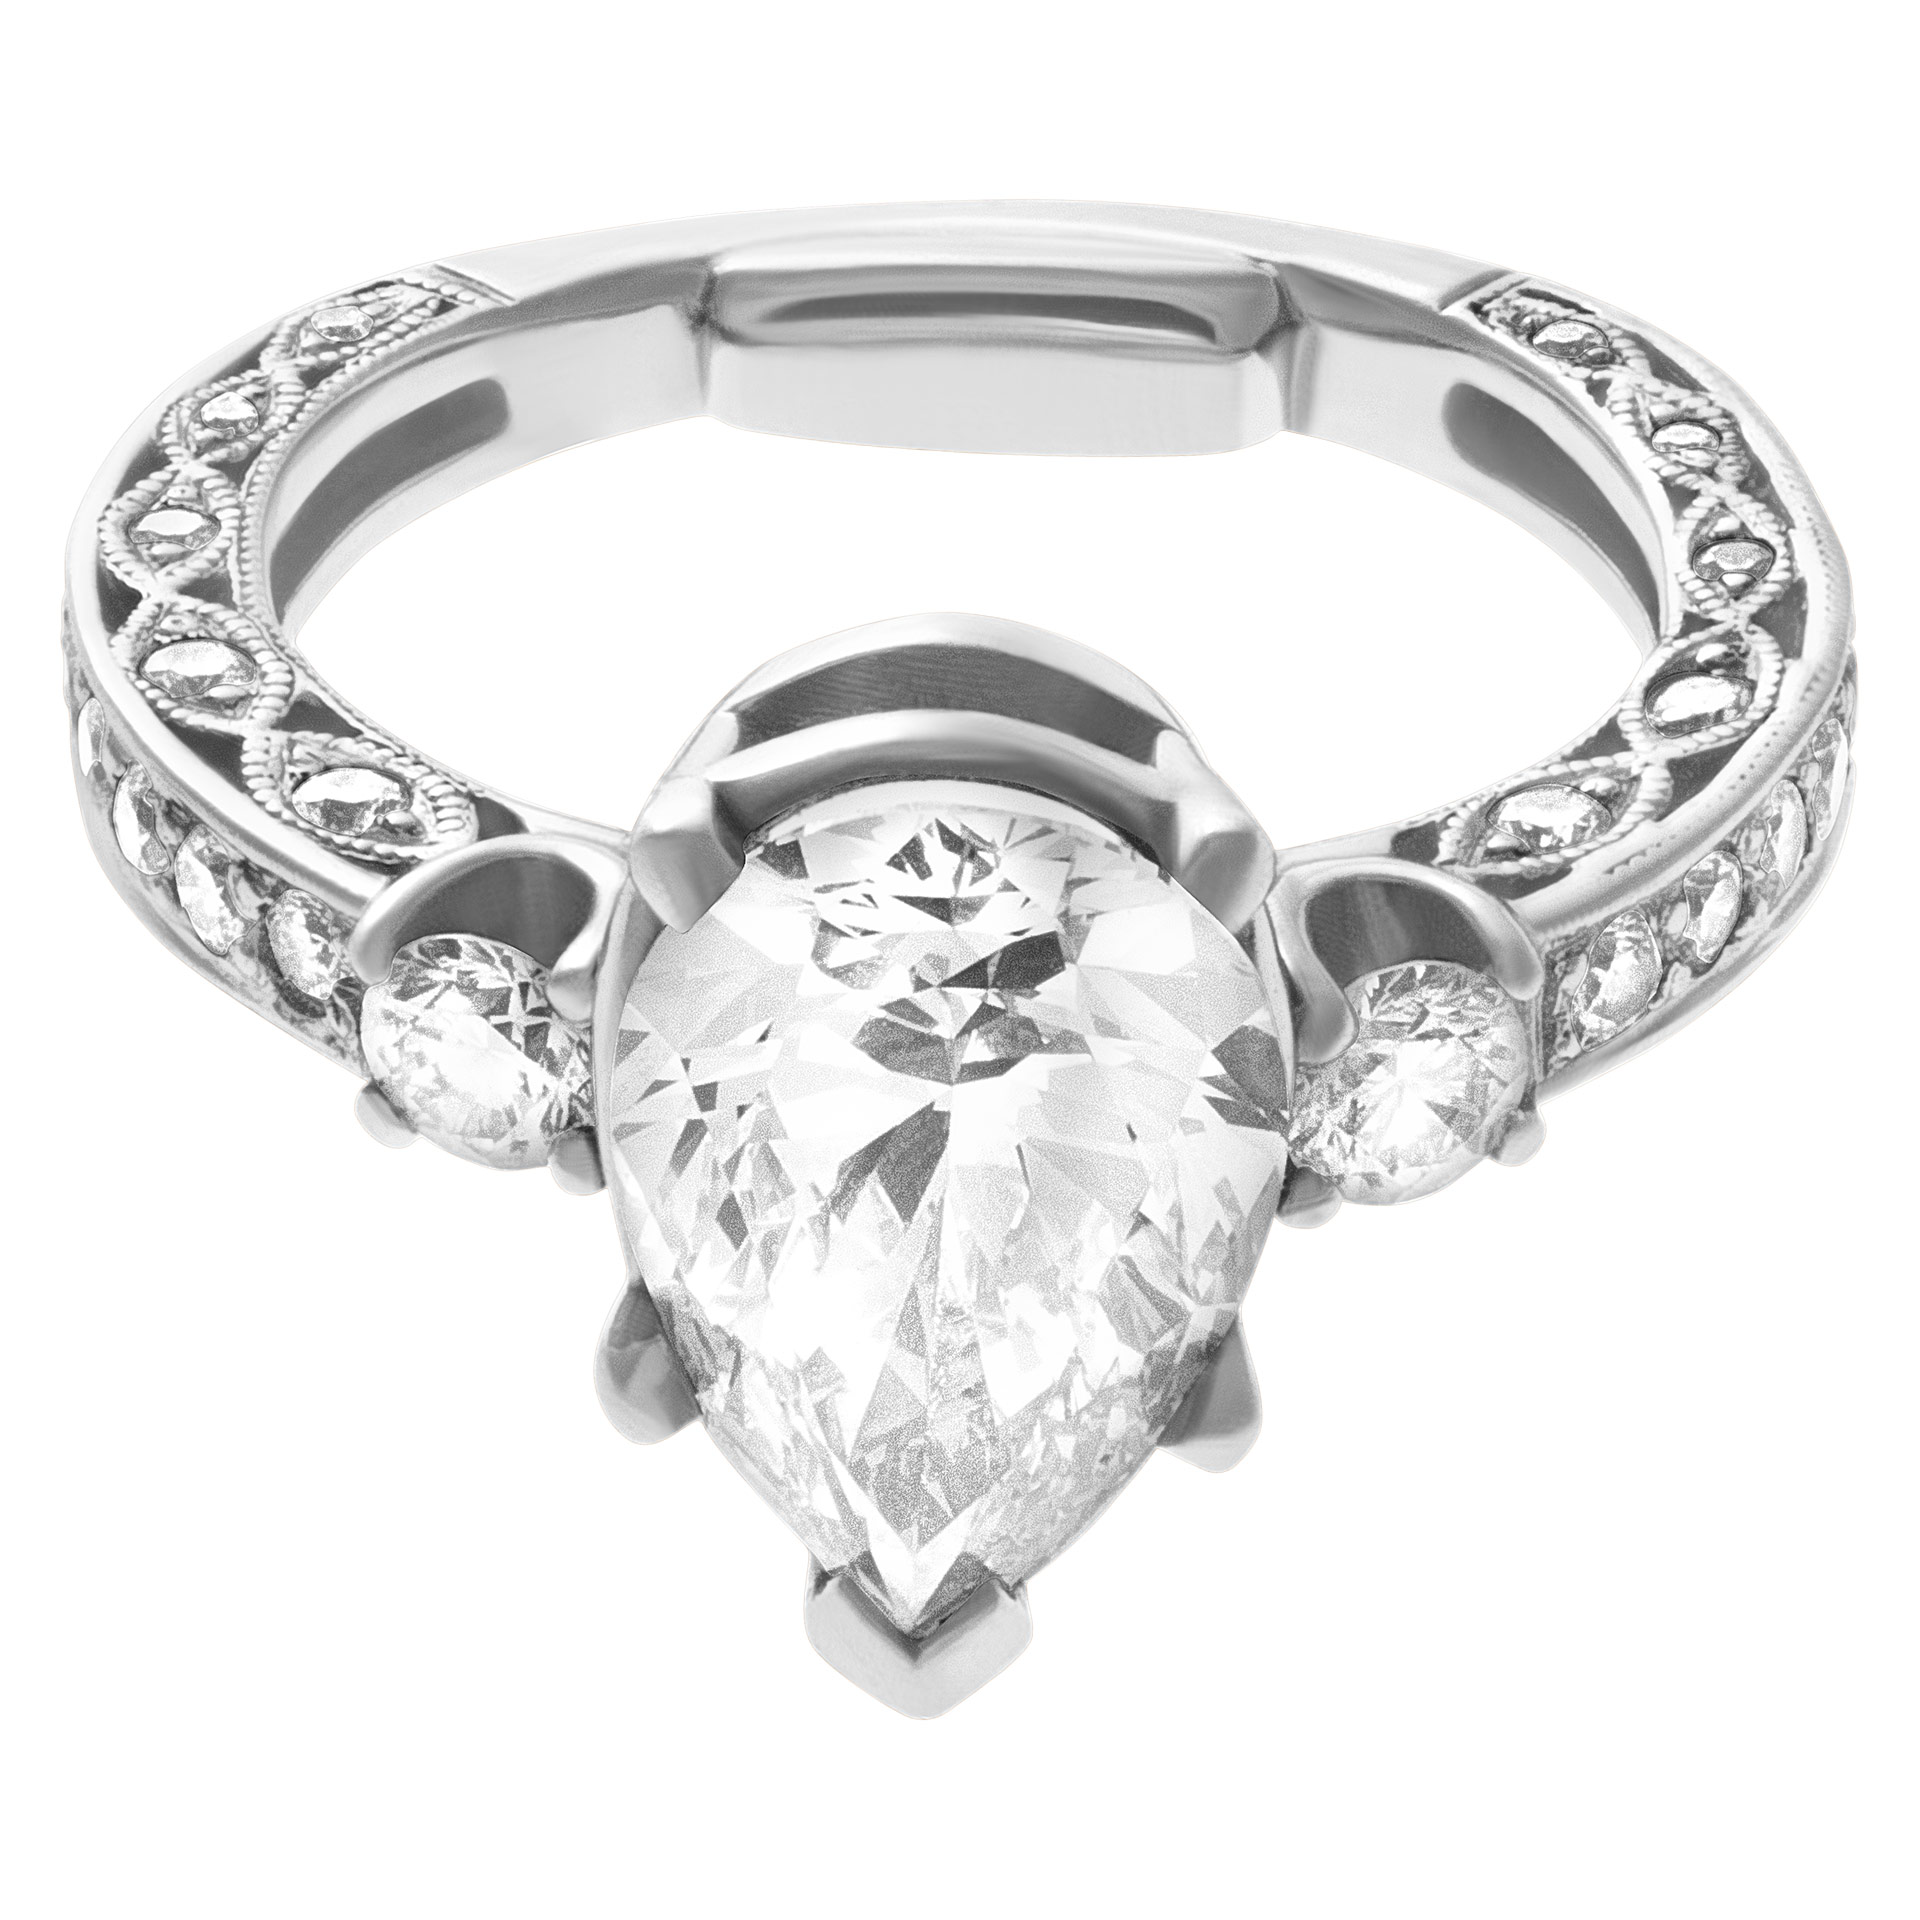 GIA certified pear brilliant cut 2.21 carat (K color, SI2 clarity) diamond ring